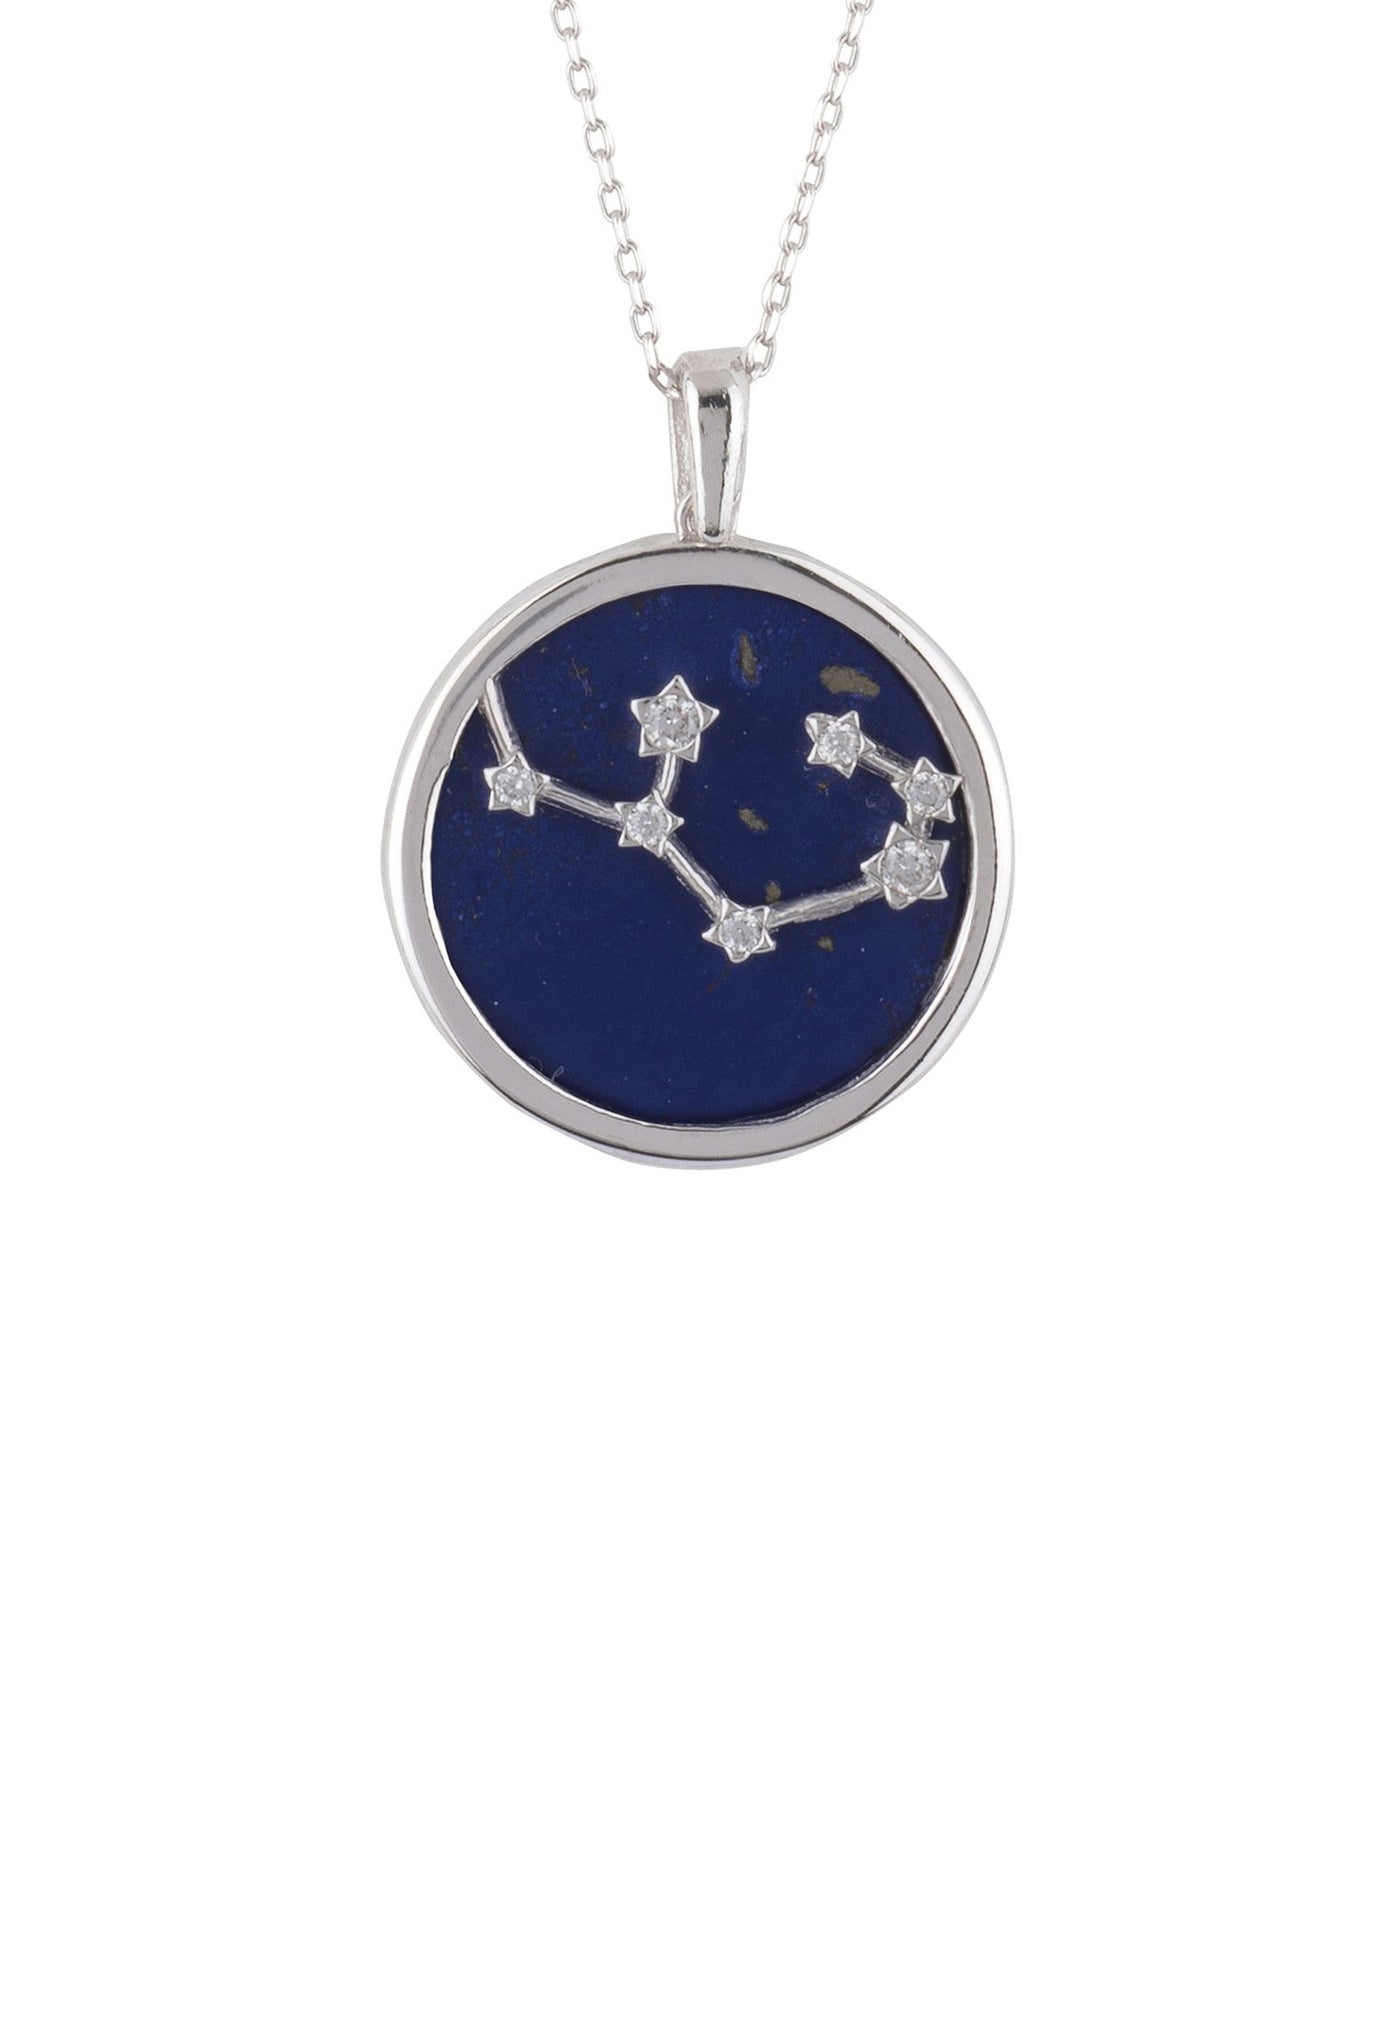 Sagittarius - Necklace - 925 sterling silver - lapis lazuli with white zirconia